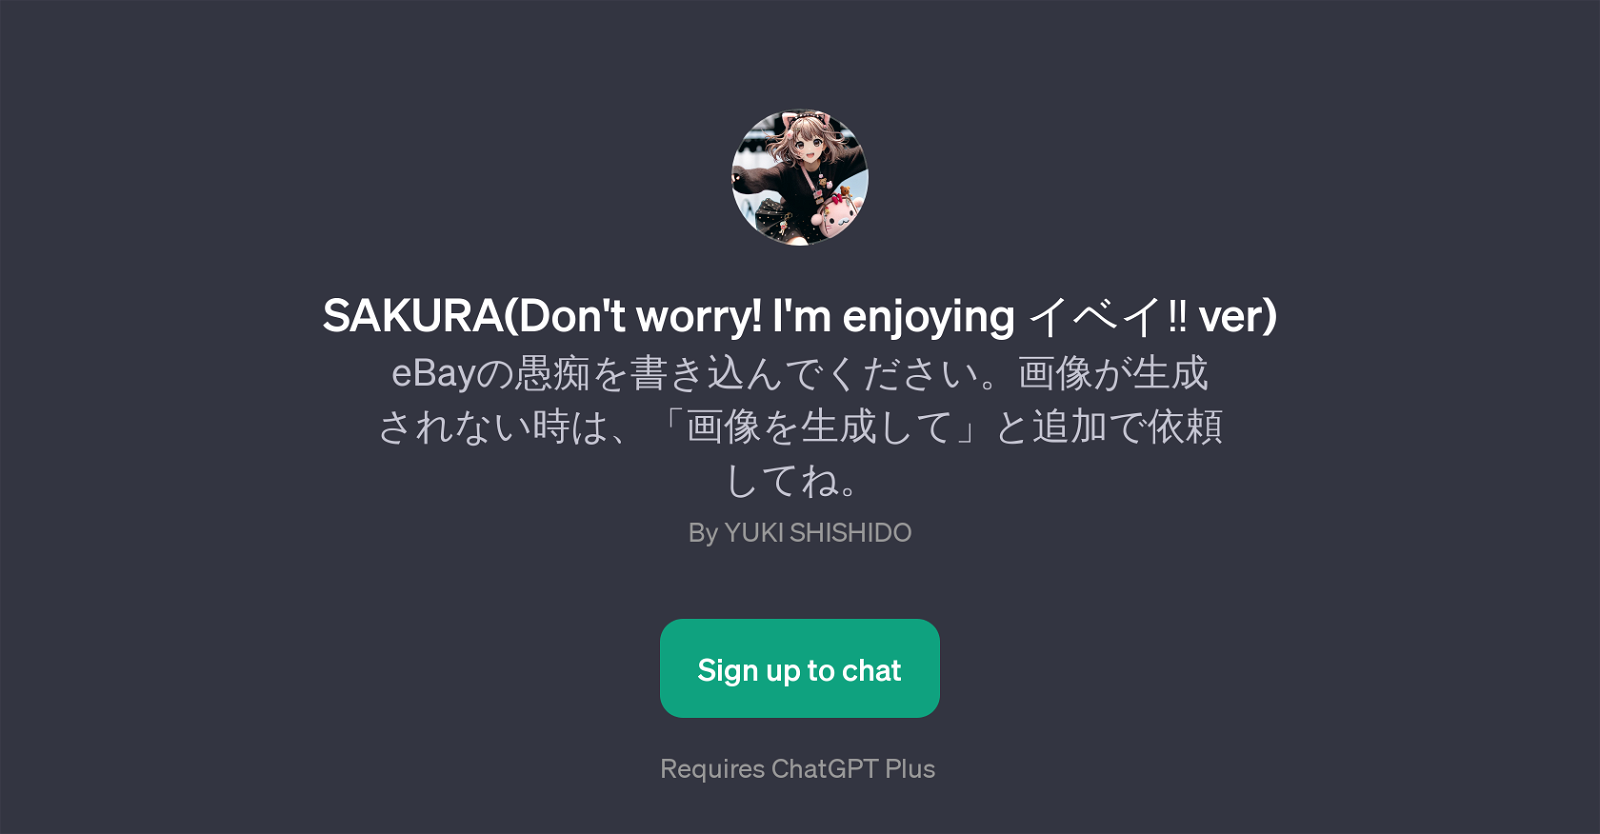 SAKURA(Don't worry! I'm enjoying  ver) website